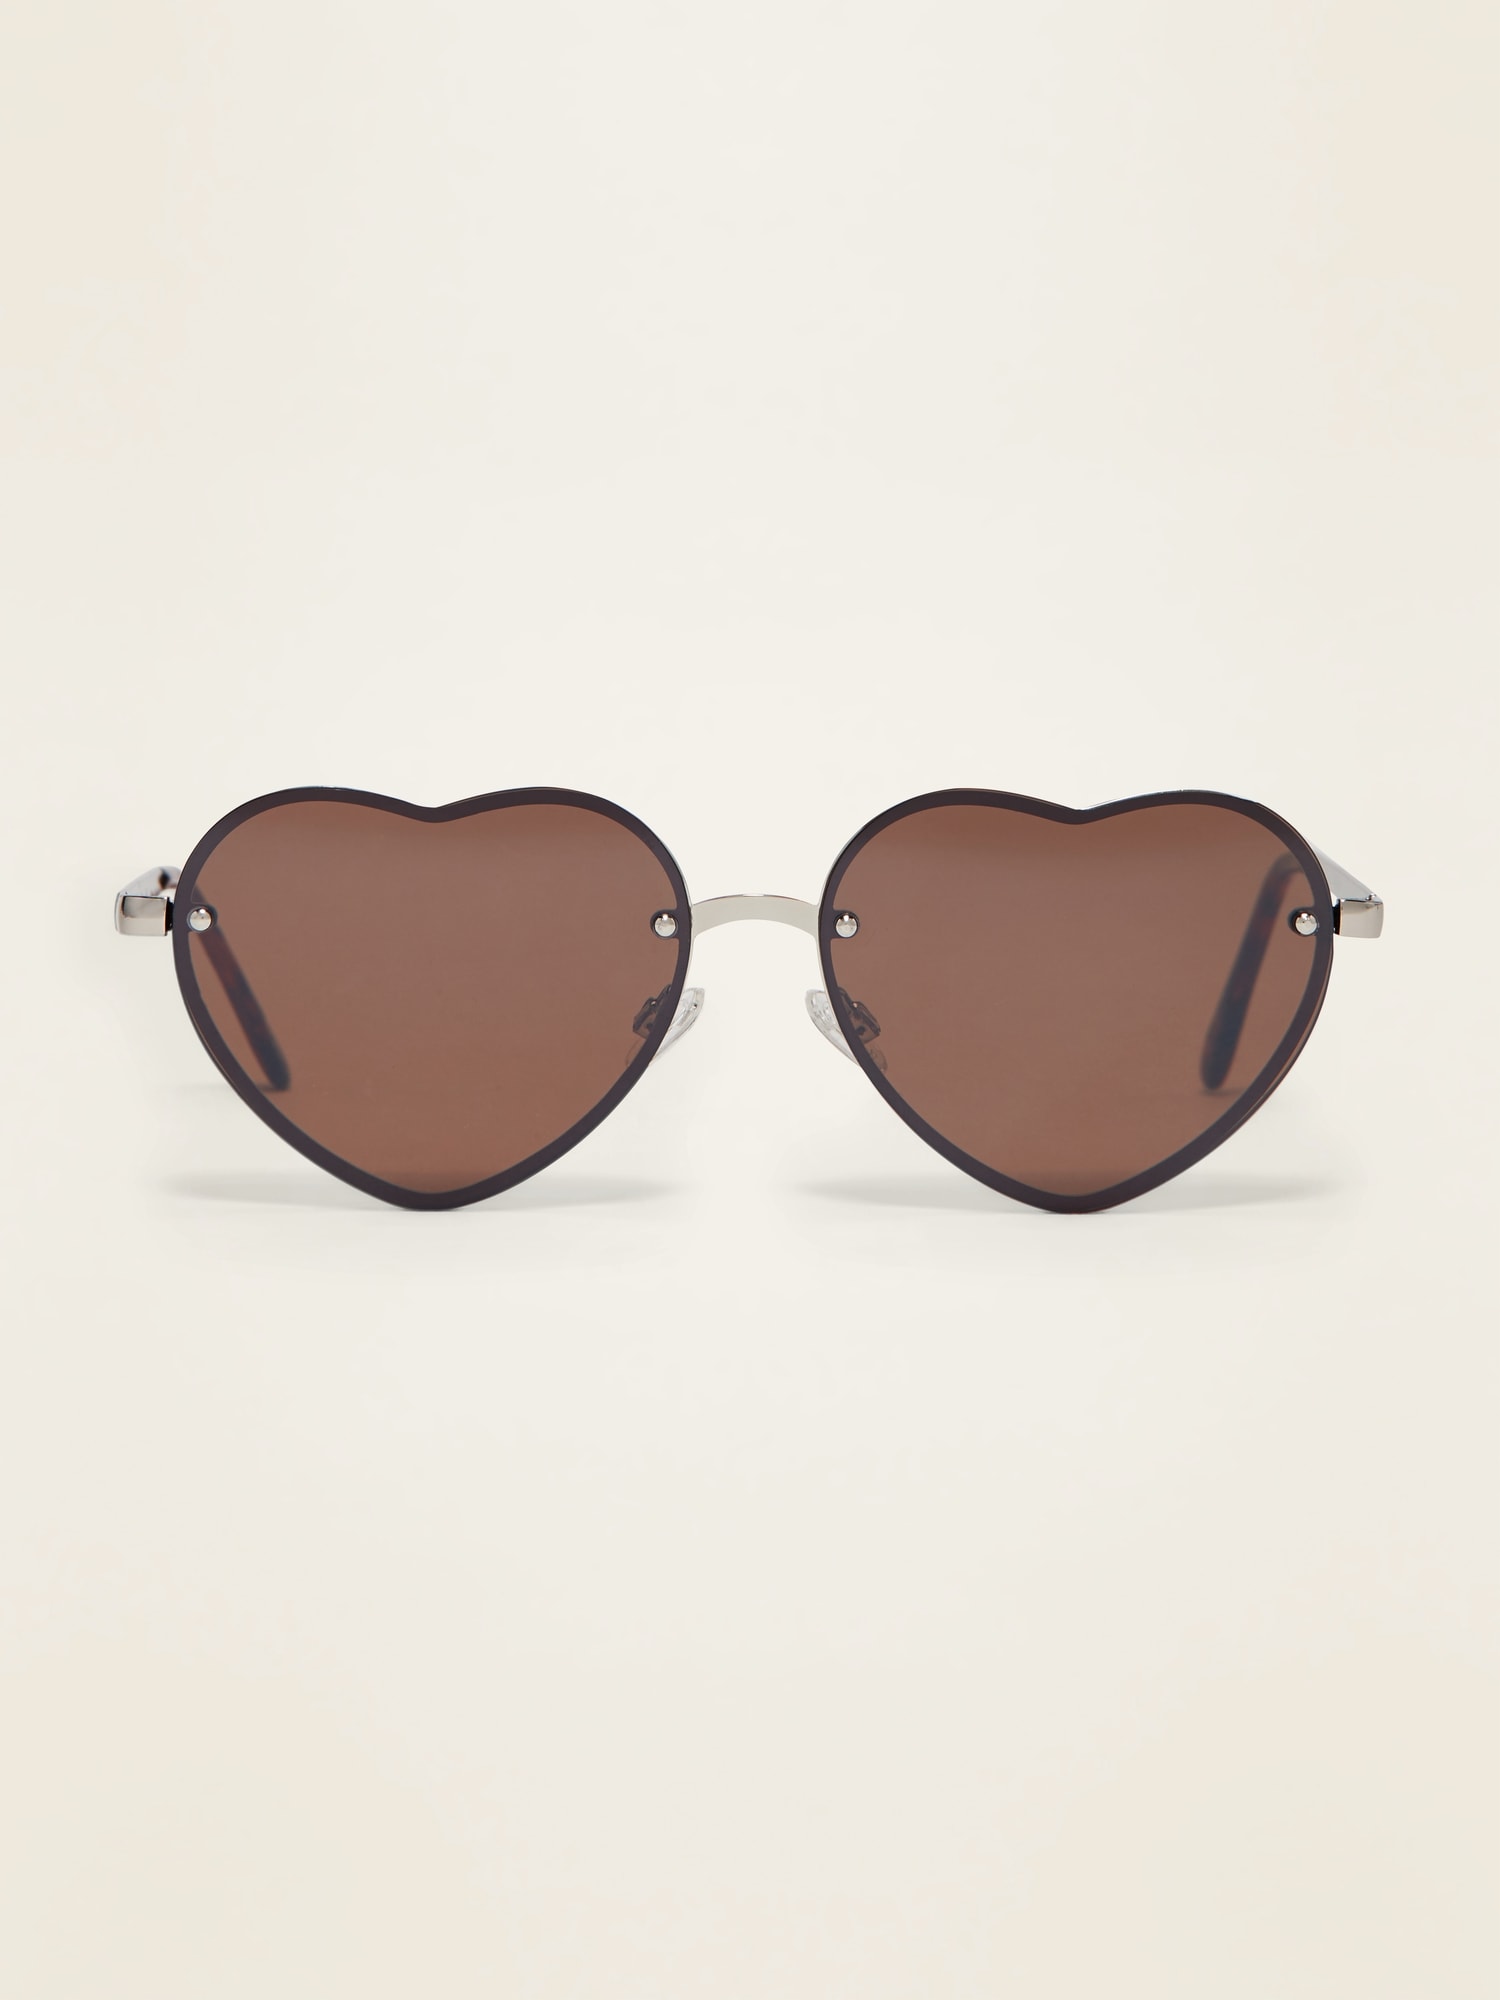 Old Navy Sunglasses for Women | Mercari